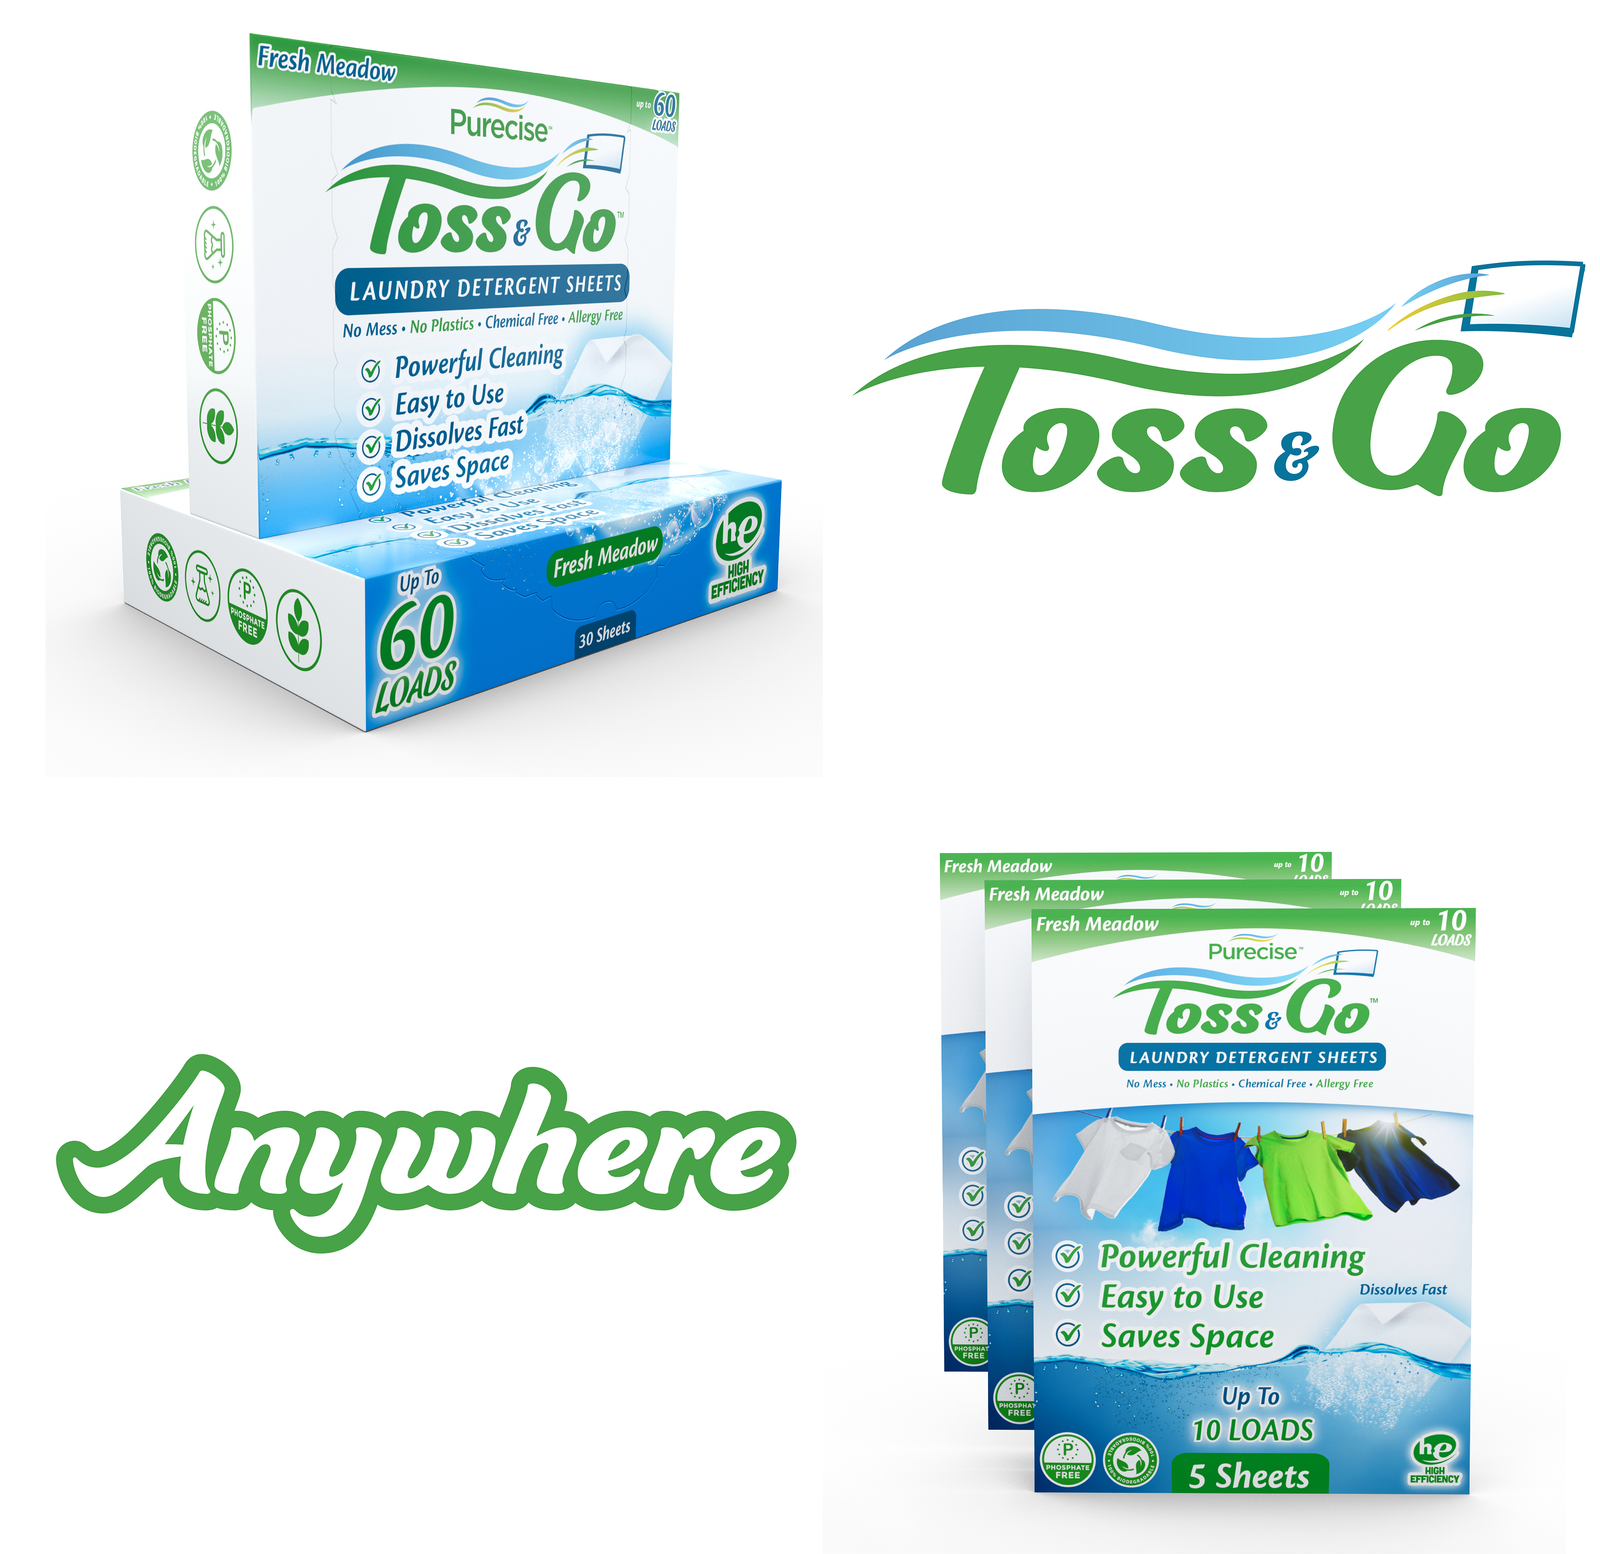 Toss & Go Home & Away Bundle